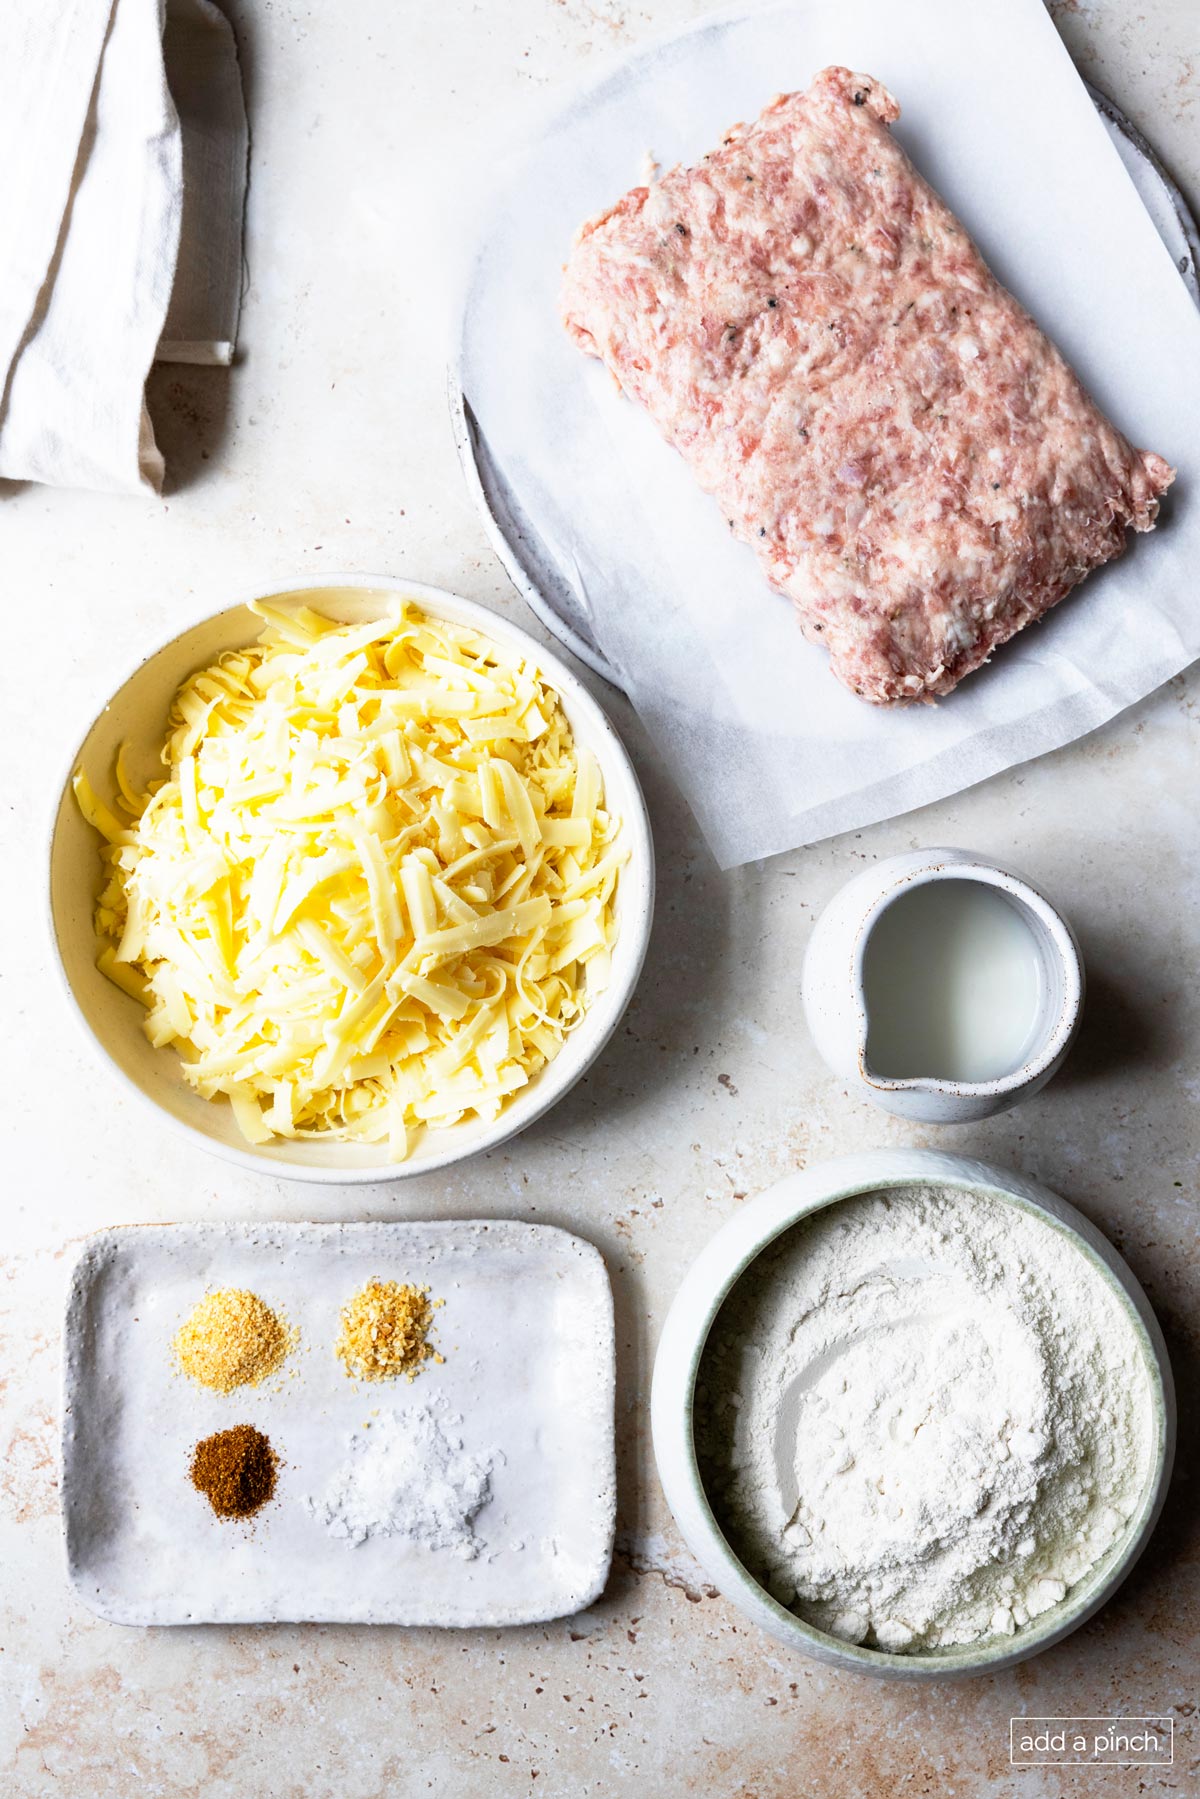 Ingredients for sausage balls: sausage, milk, flour, seasonings and cheese.